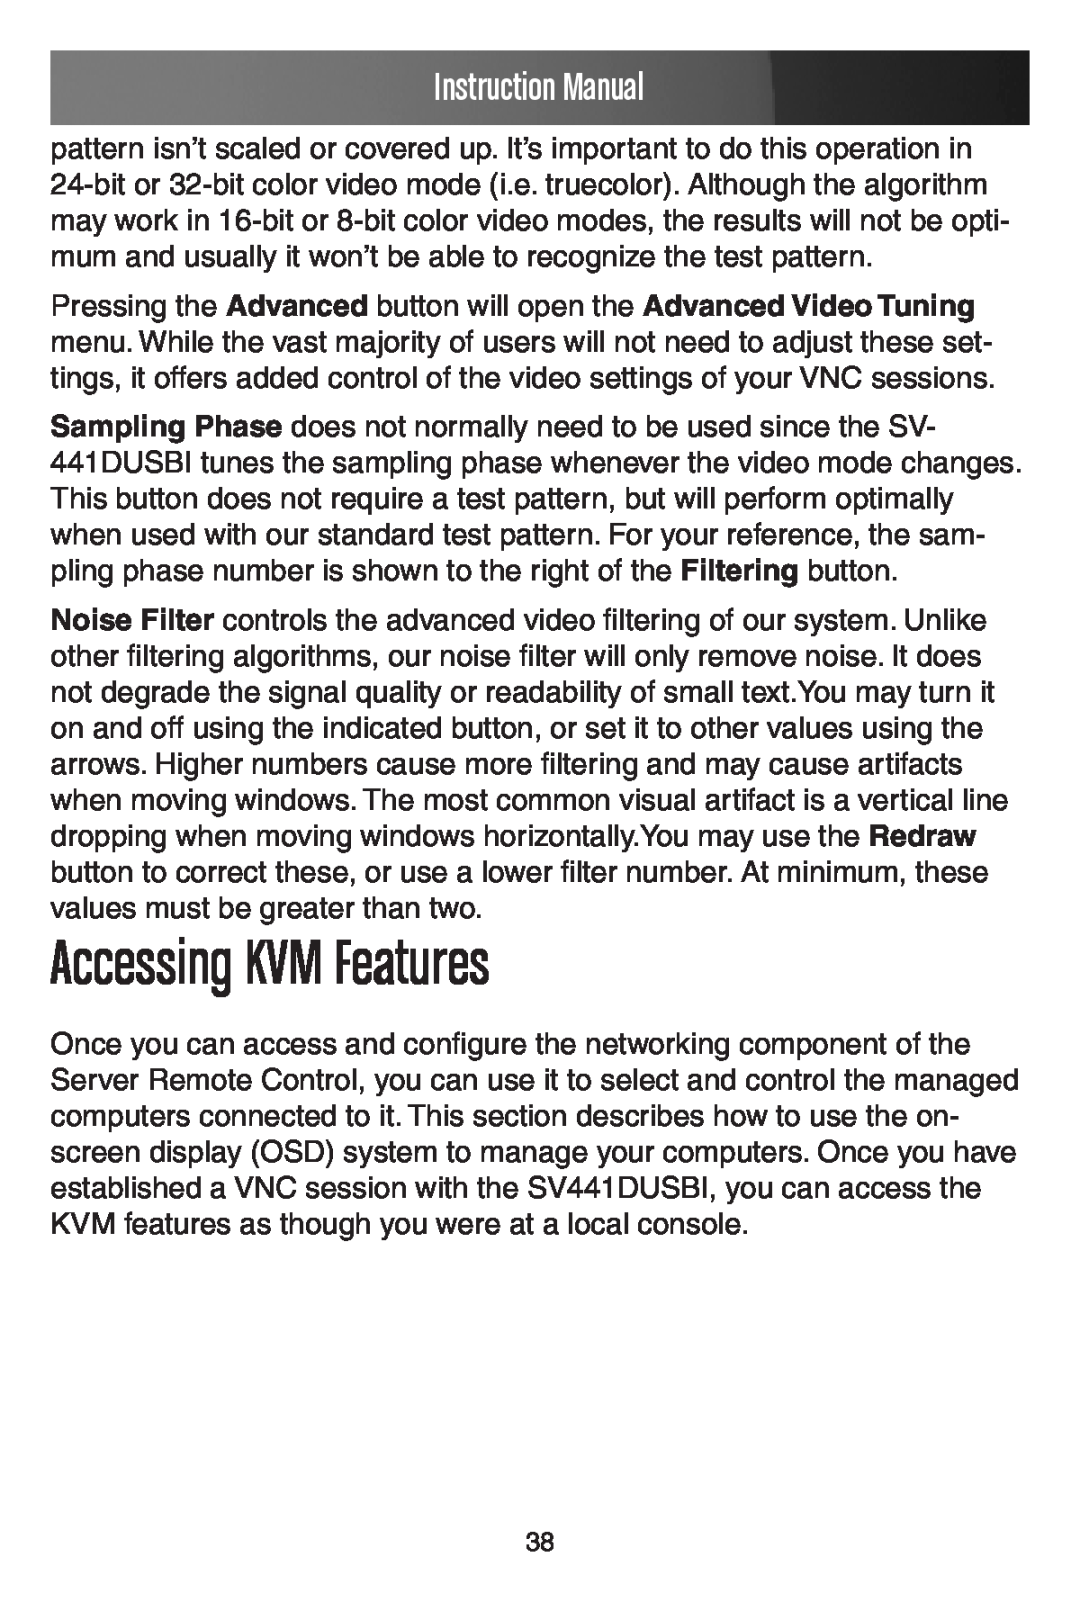 StarTech.com SV441DUSBI instruction manual Accessing KVM Features, Instruction Manual 